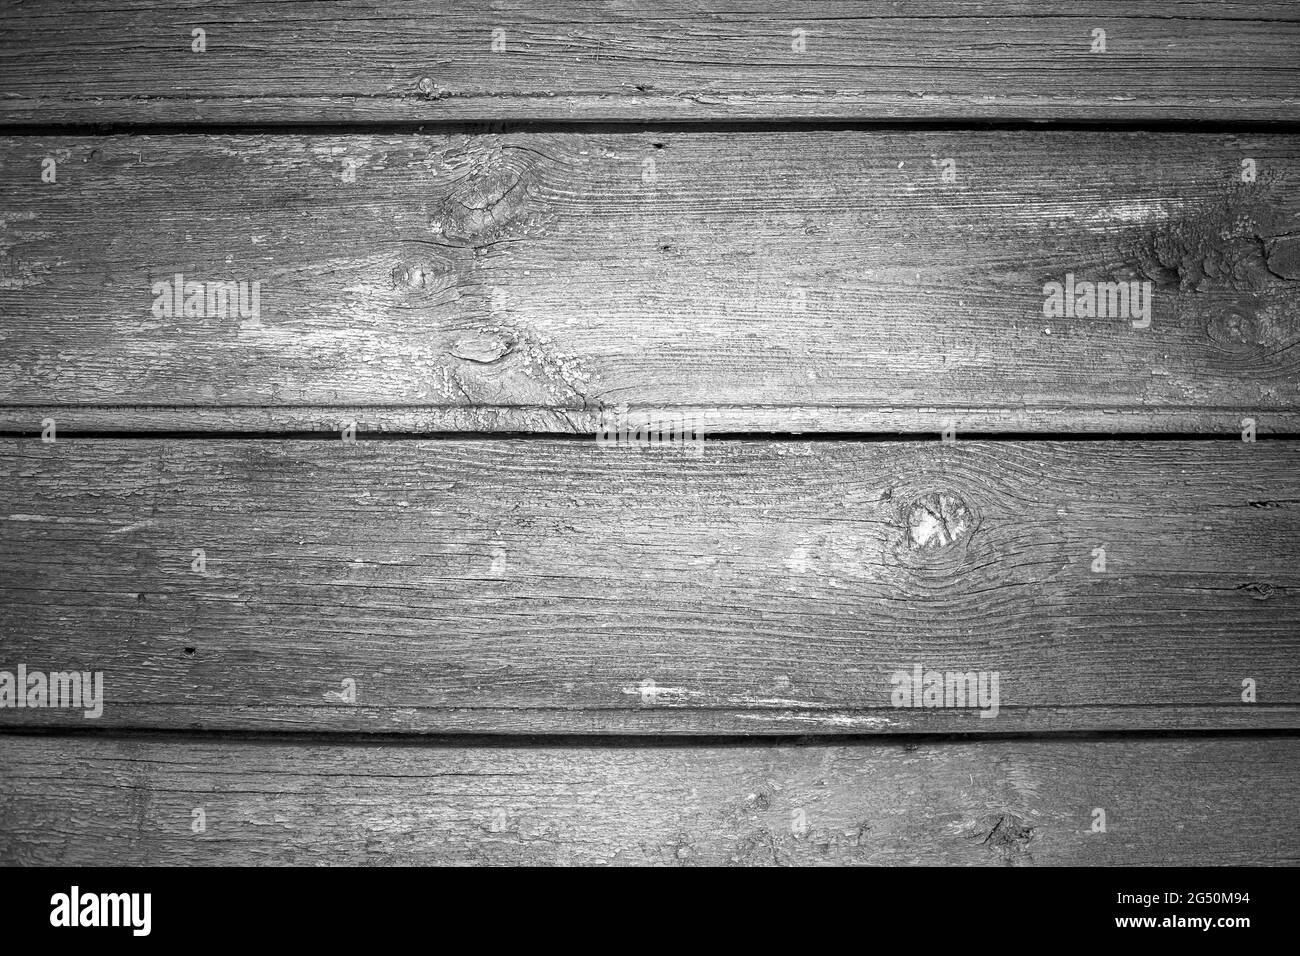 Grungy dark gray wooden wall background photo texture Stock Photo